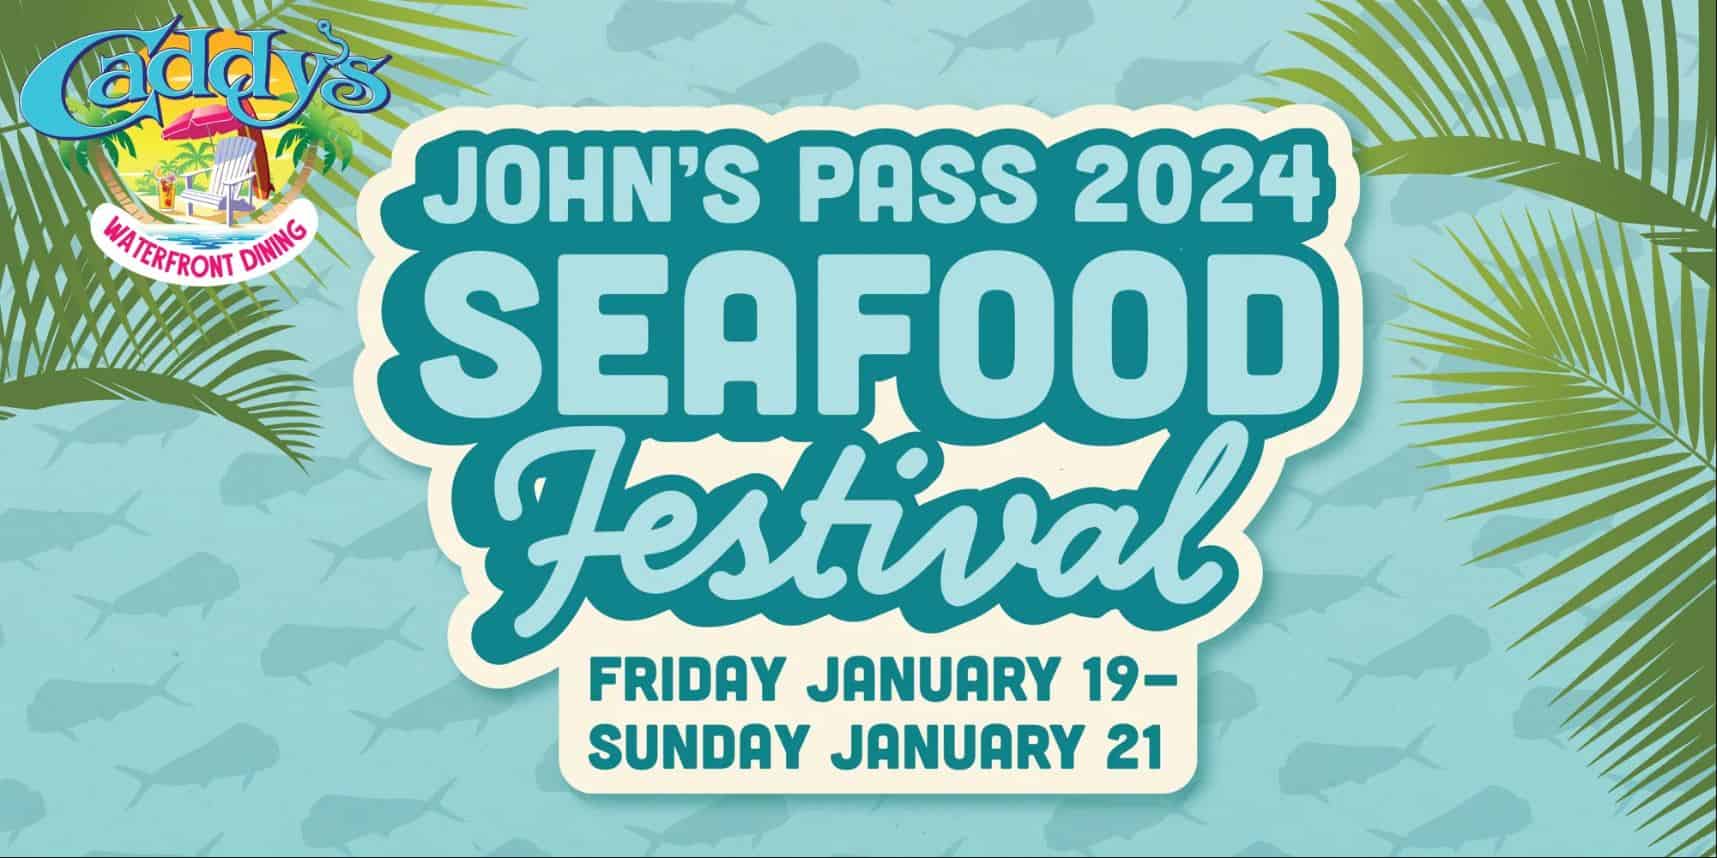 John’s Pass 2024 Seafood Festival! I Love the Burg